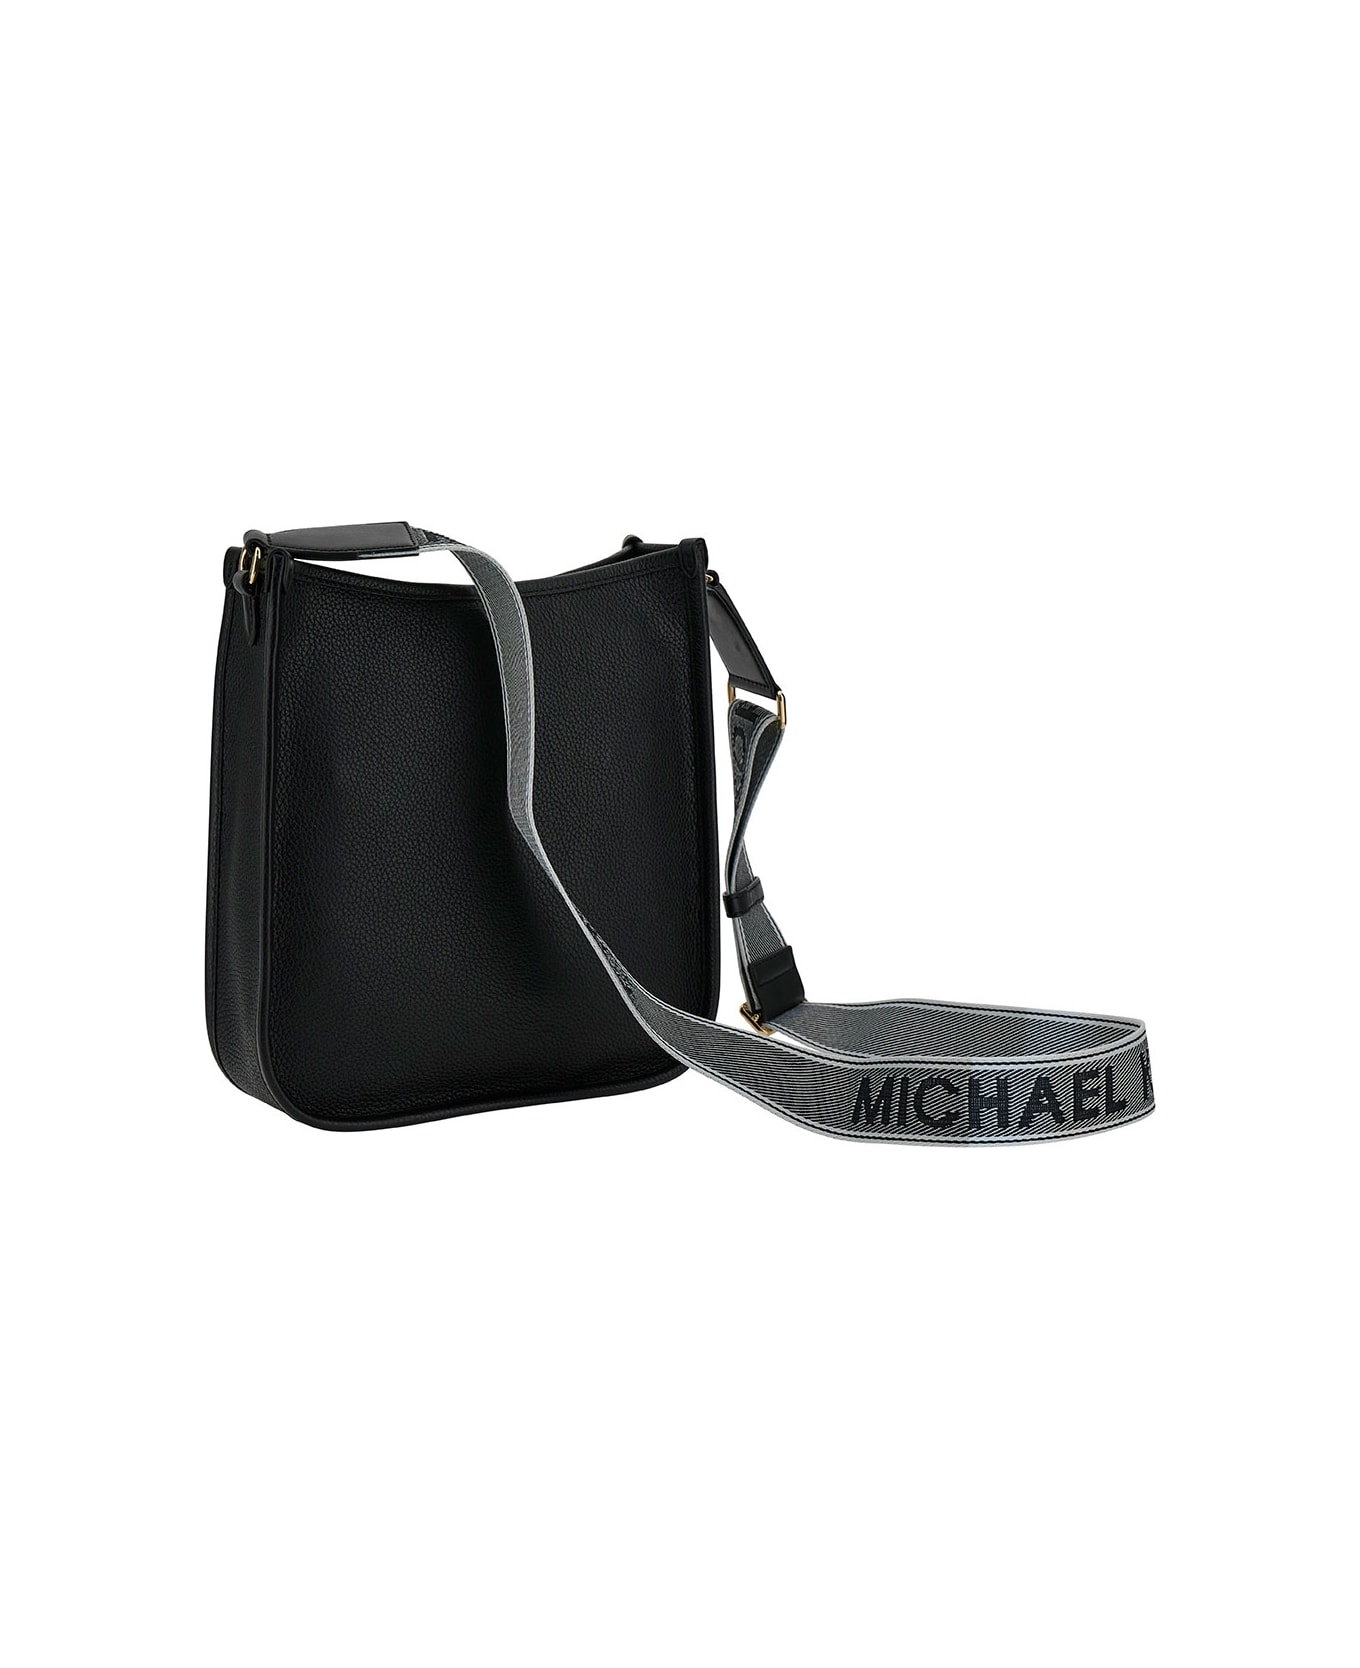 MICHAEL Michael Kors Black Crossbody Bag With Mk Logo Detail In Hammered Leather Woman - Black ショルダーバッグ